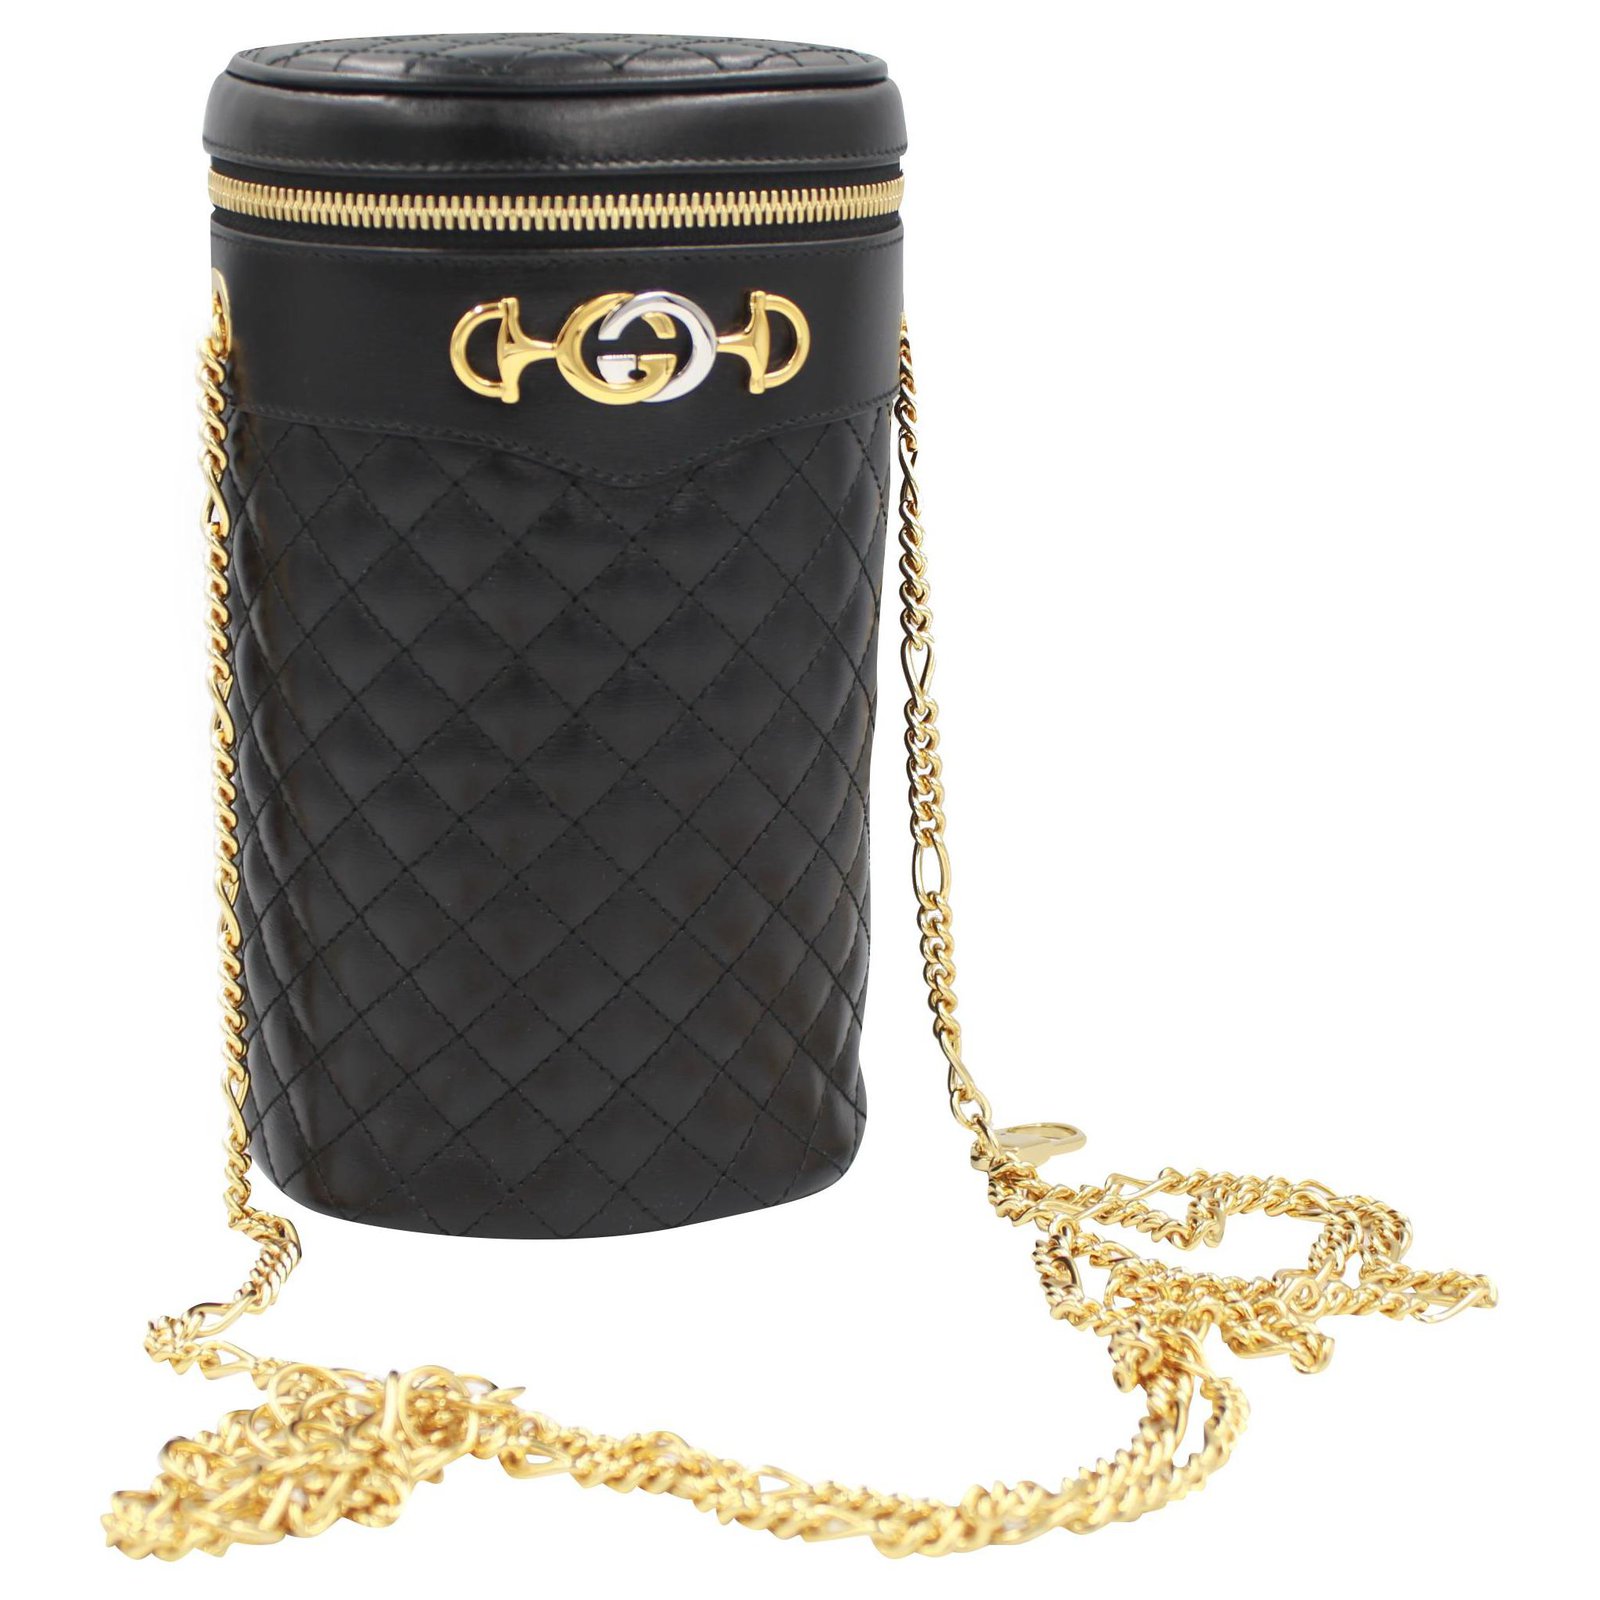 gucci handbag with gold chain